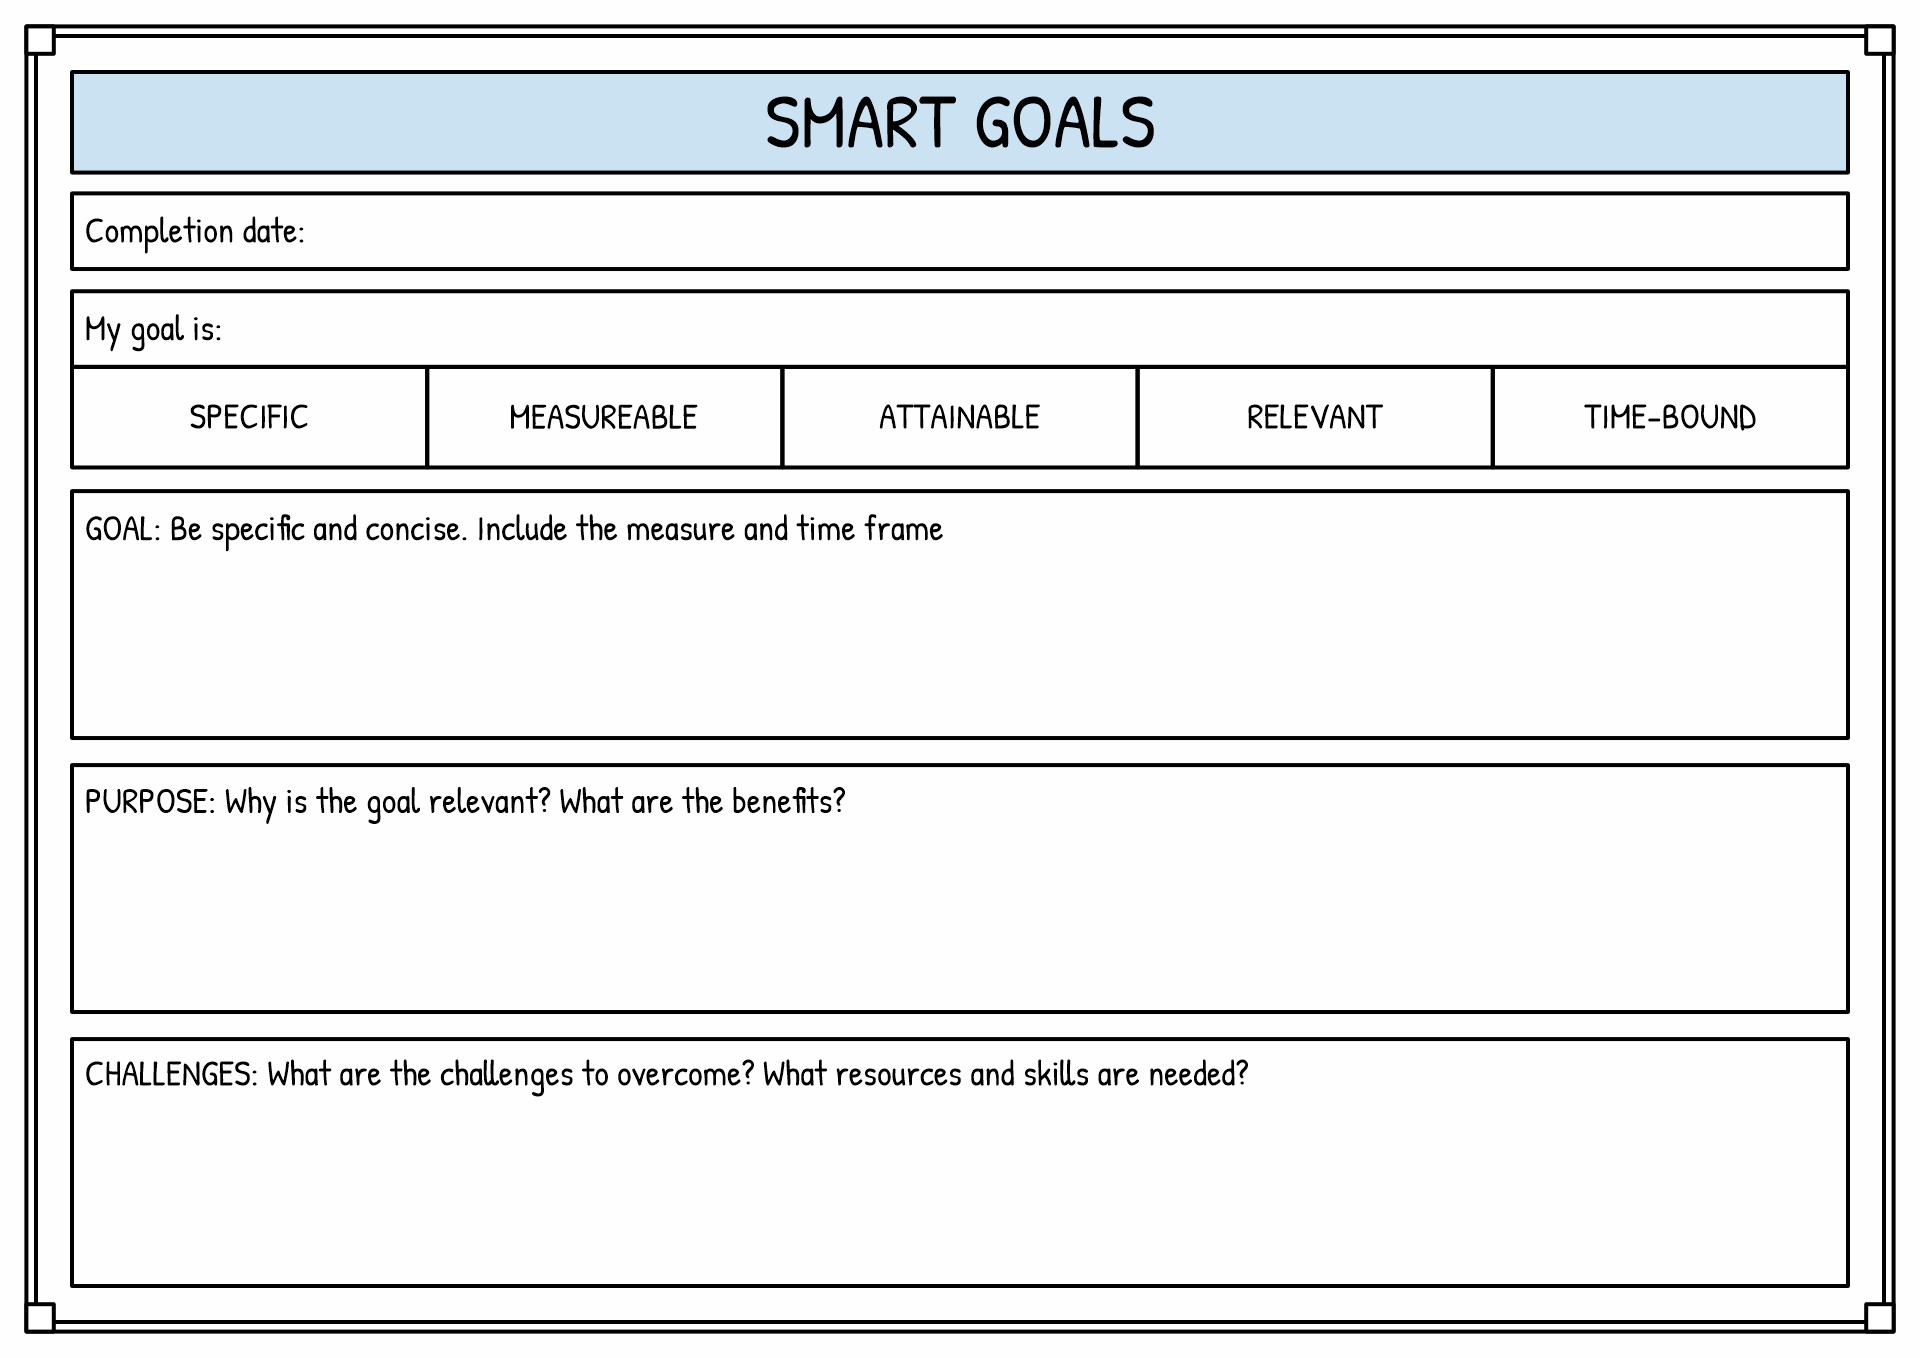 Goal Setting Worksheet Template